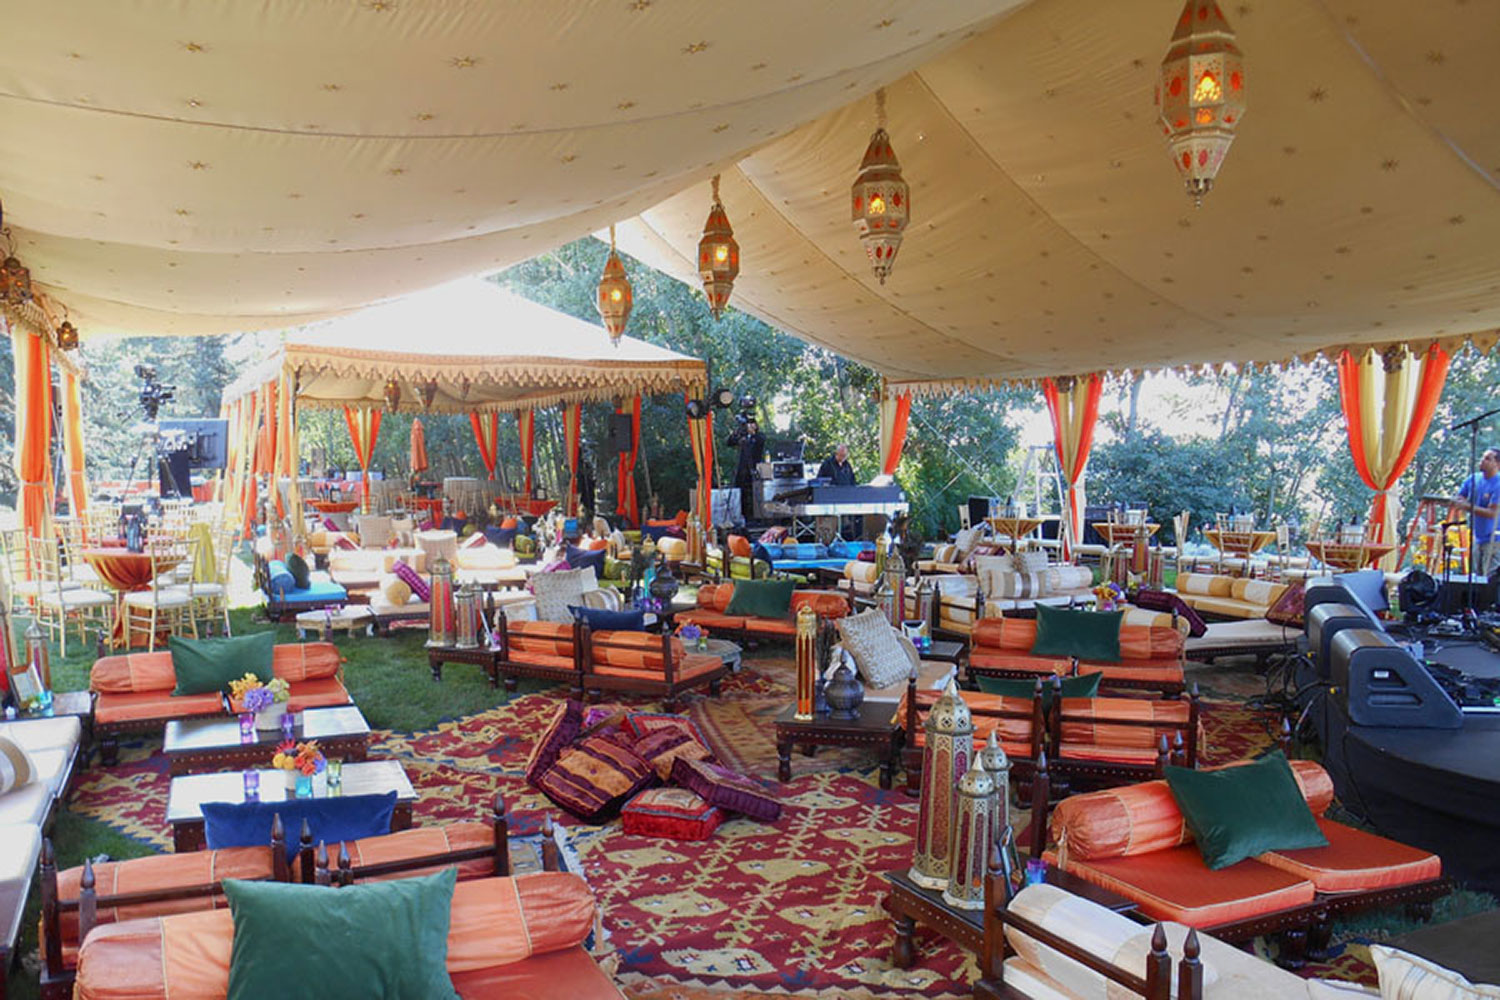 raj-tents-furniture-eclectic-audience-lounge.jpg